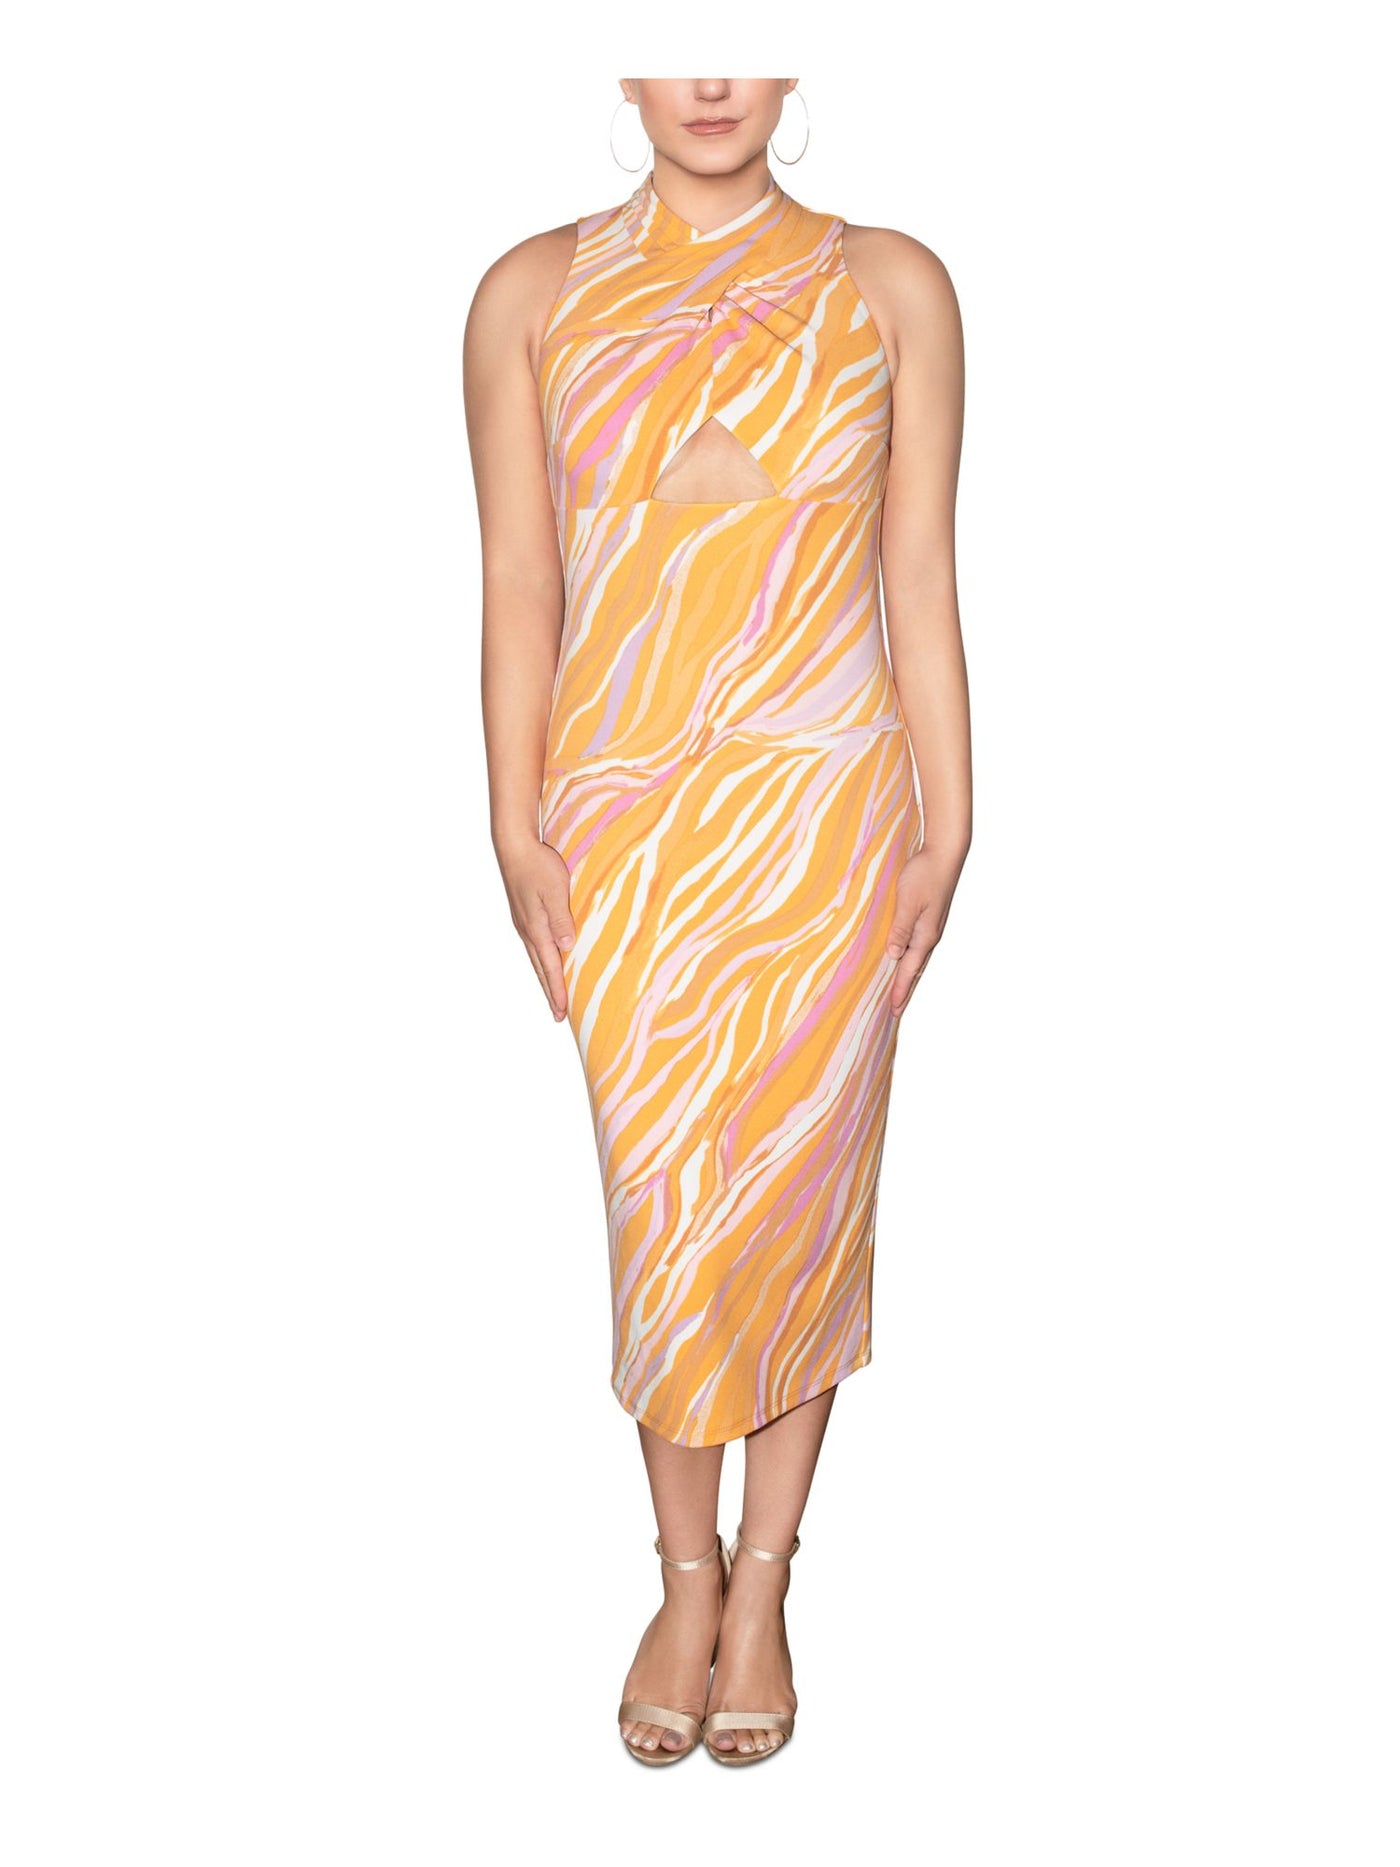 RACHEL RACHEL ROY Womens Orange Zippered Cut Out Pleated Crossover Printed Sleeveless Mock Neck Midi Evening Sheath Dress L